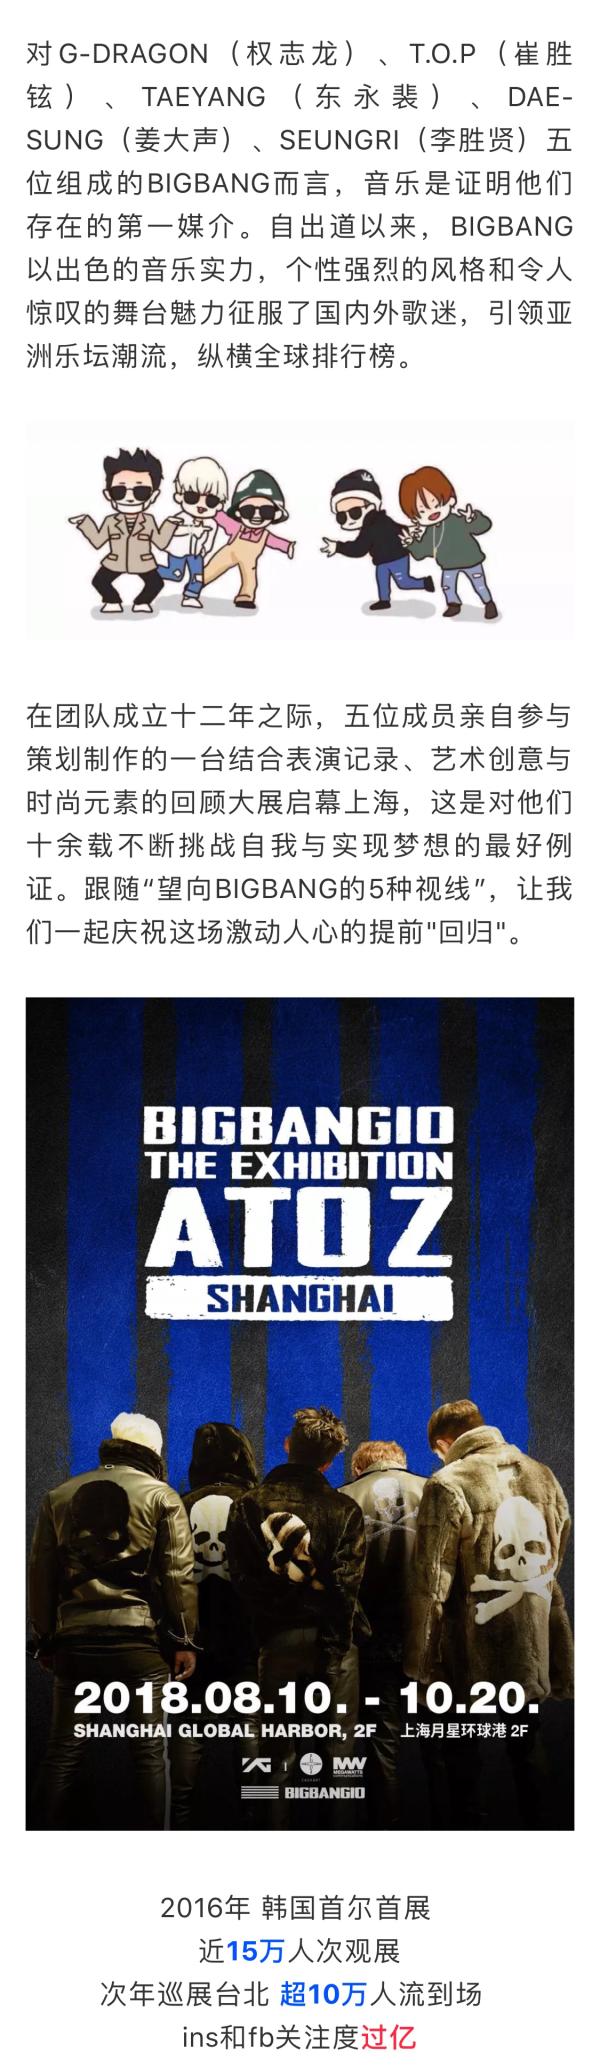 BIGBANG10 THE EXHIBITION: A TO Z 十周年回顾大展上海站